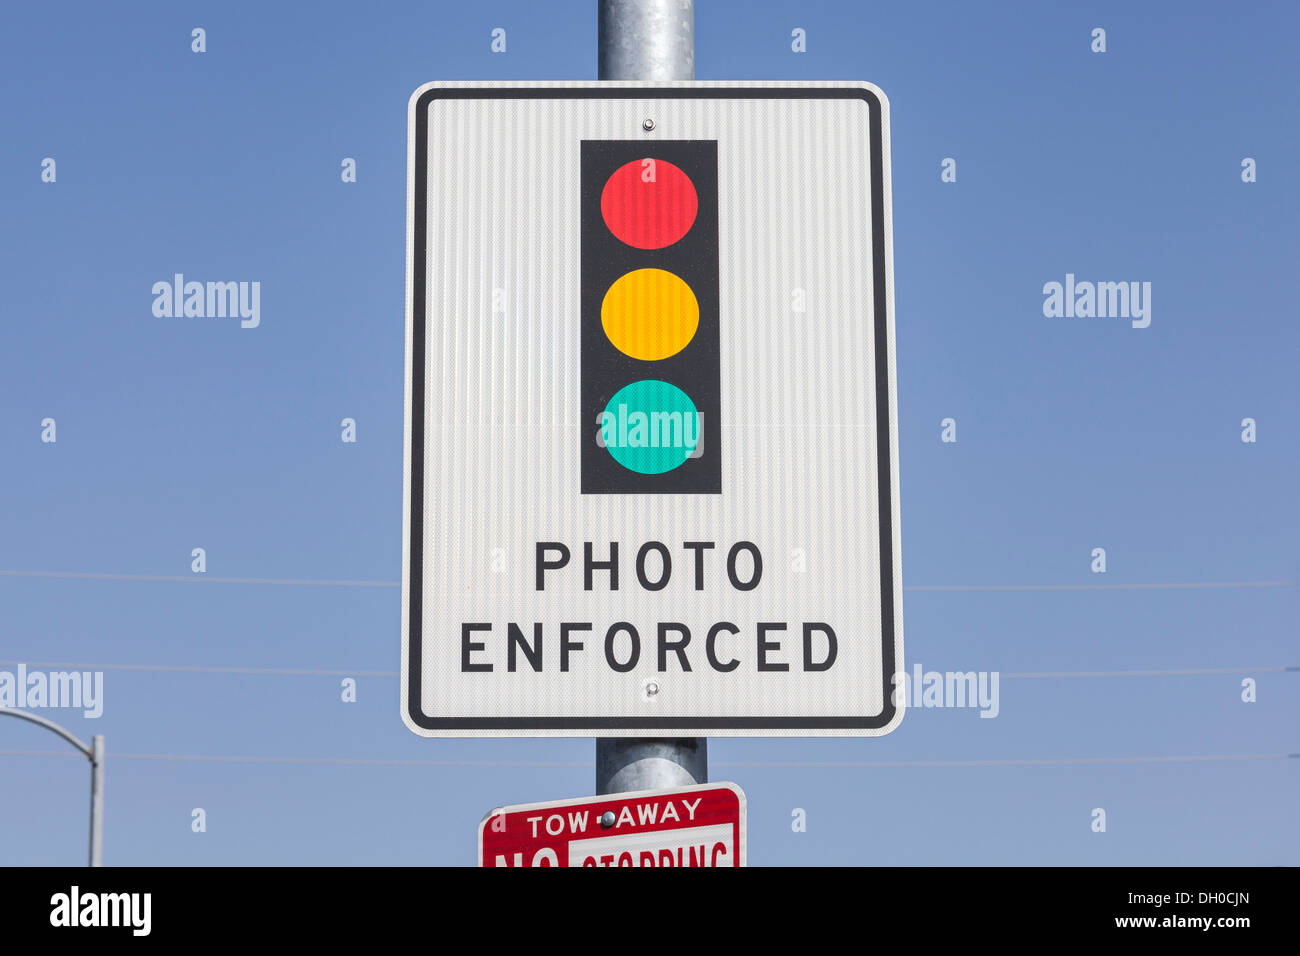 Photo enforced traffic light warning sign. Stock Photo